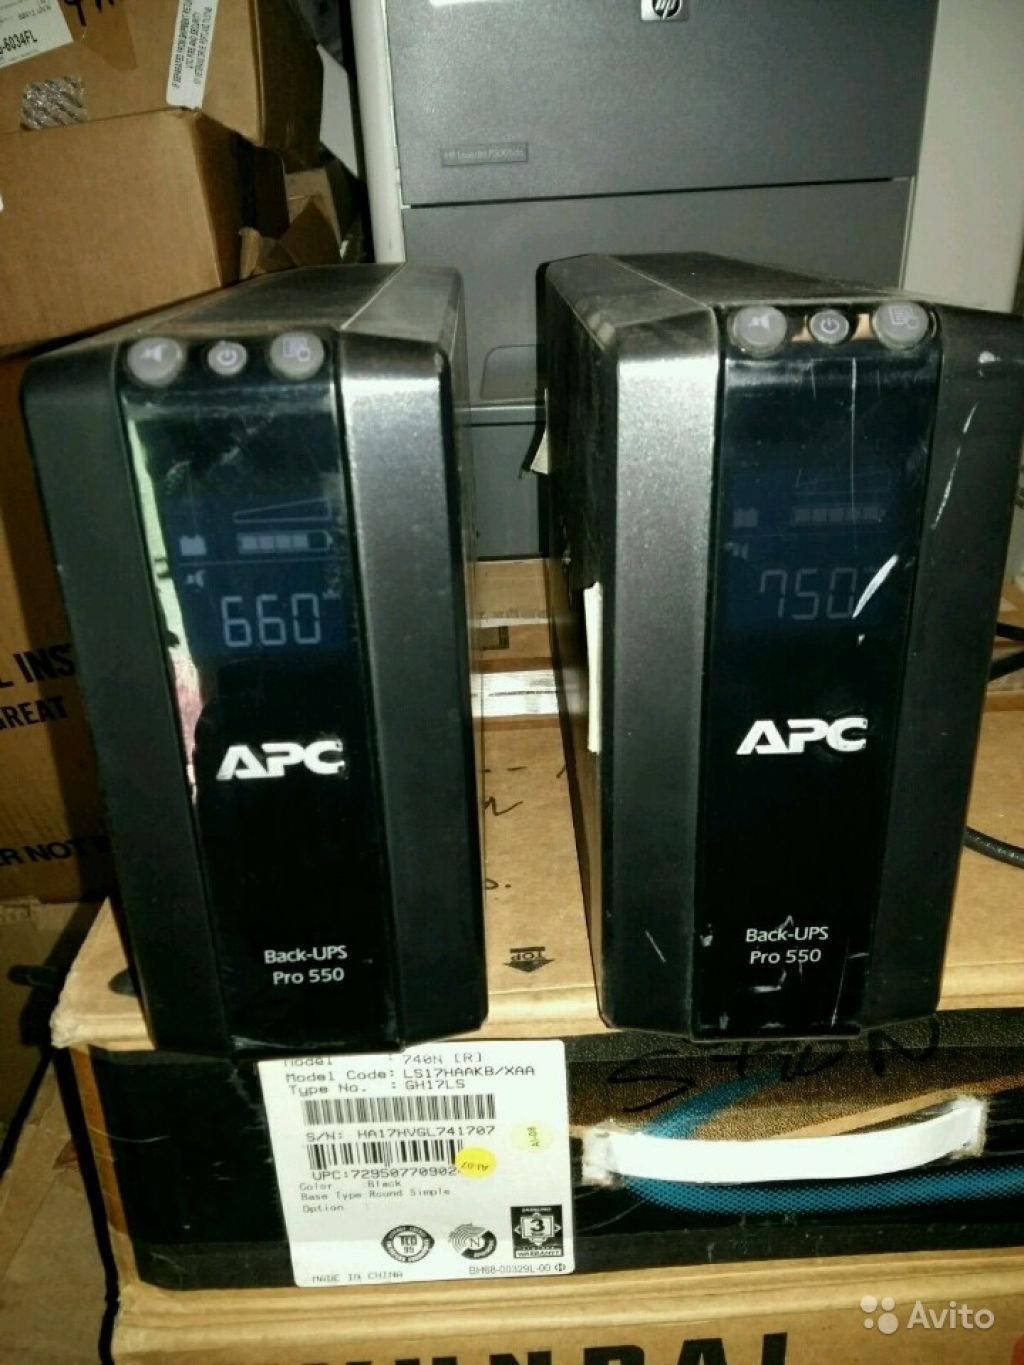 APC back ups Pro 550. APC back UPC Pro 550. ИБП APC Pro 550. APC 550 back ups. Apc 550 back